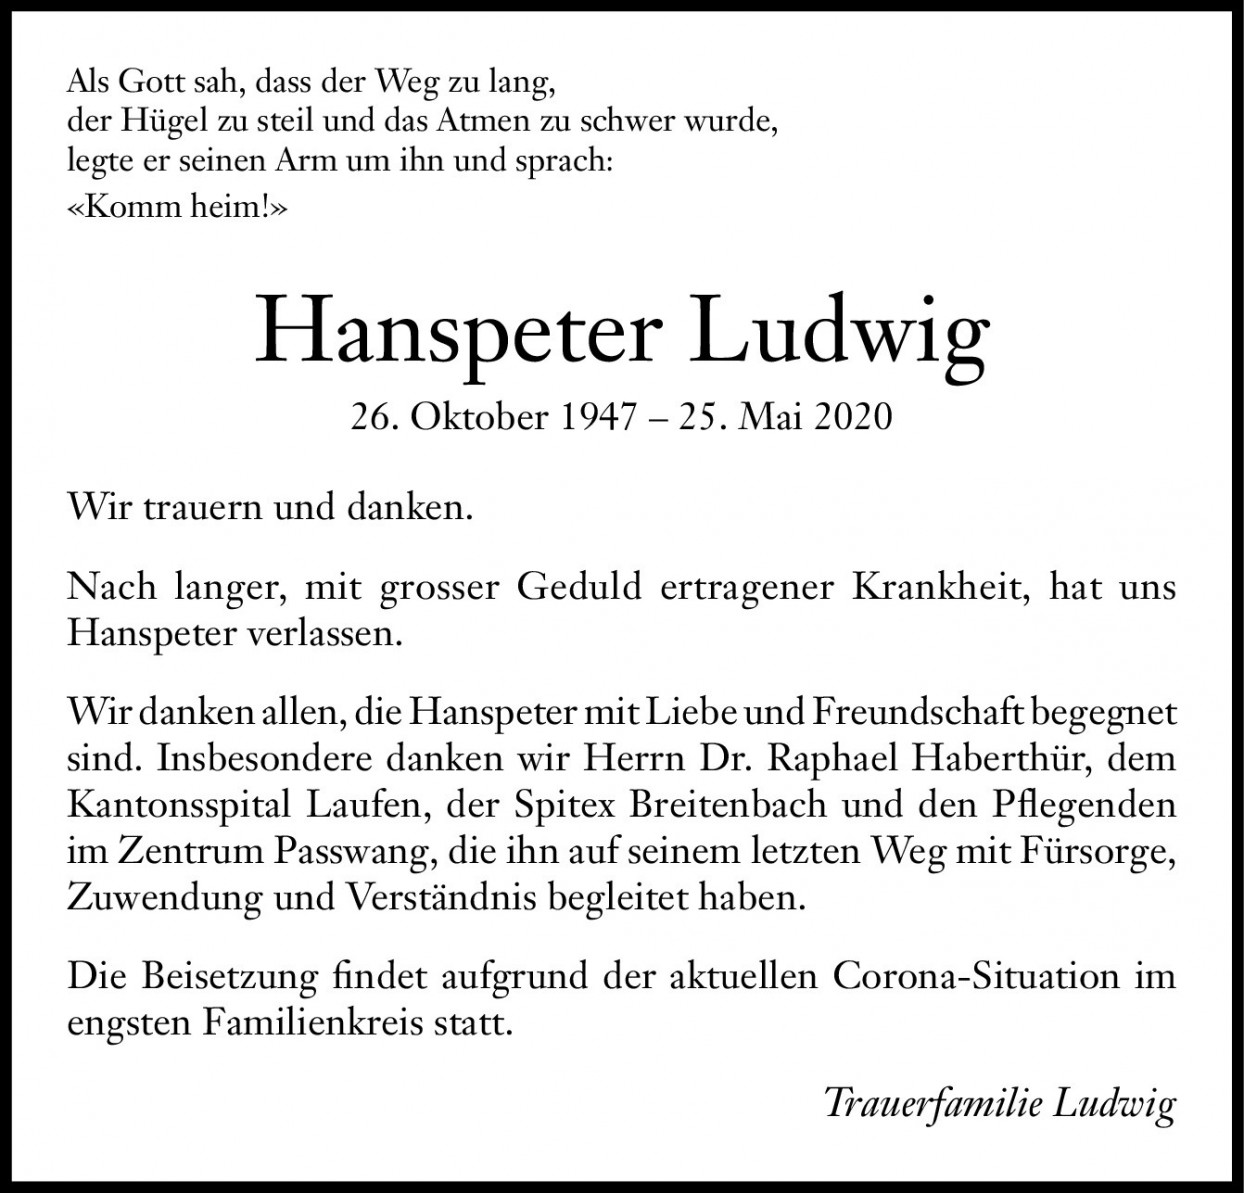 Hanspeter Ludwig